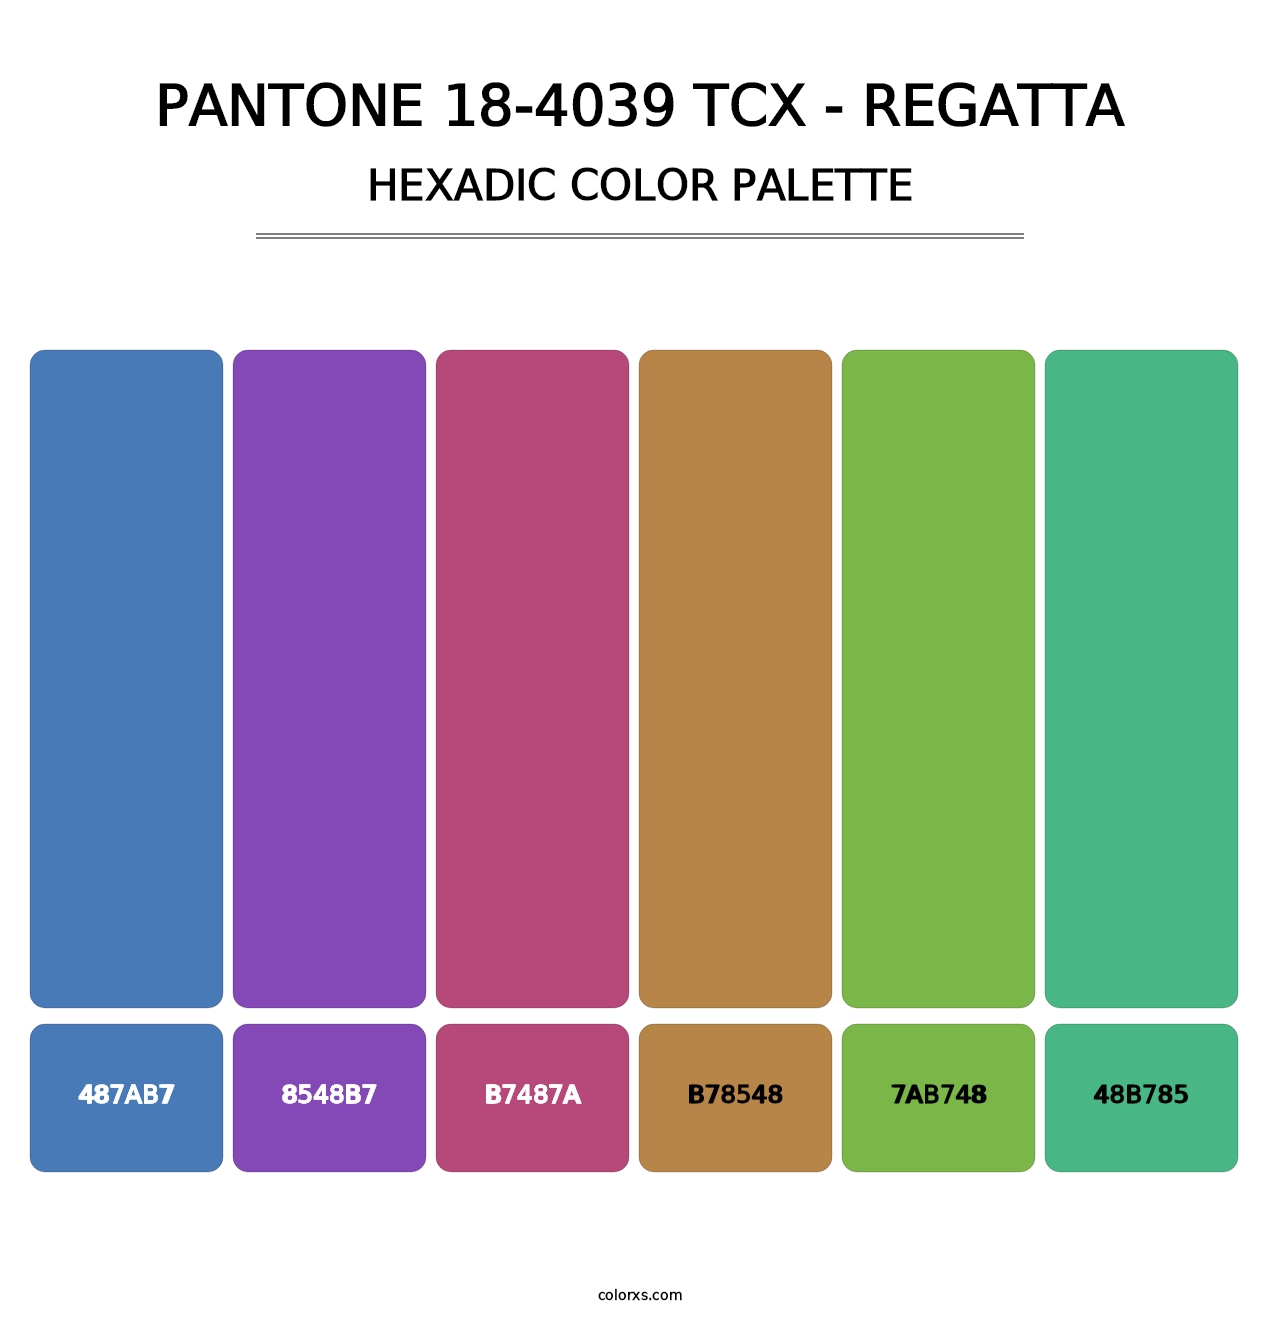 PANTONE 18-4039 TCX - Regatta - Hexadic Color Palette